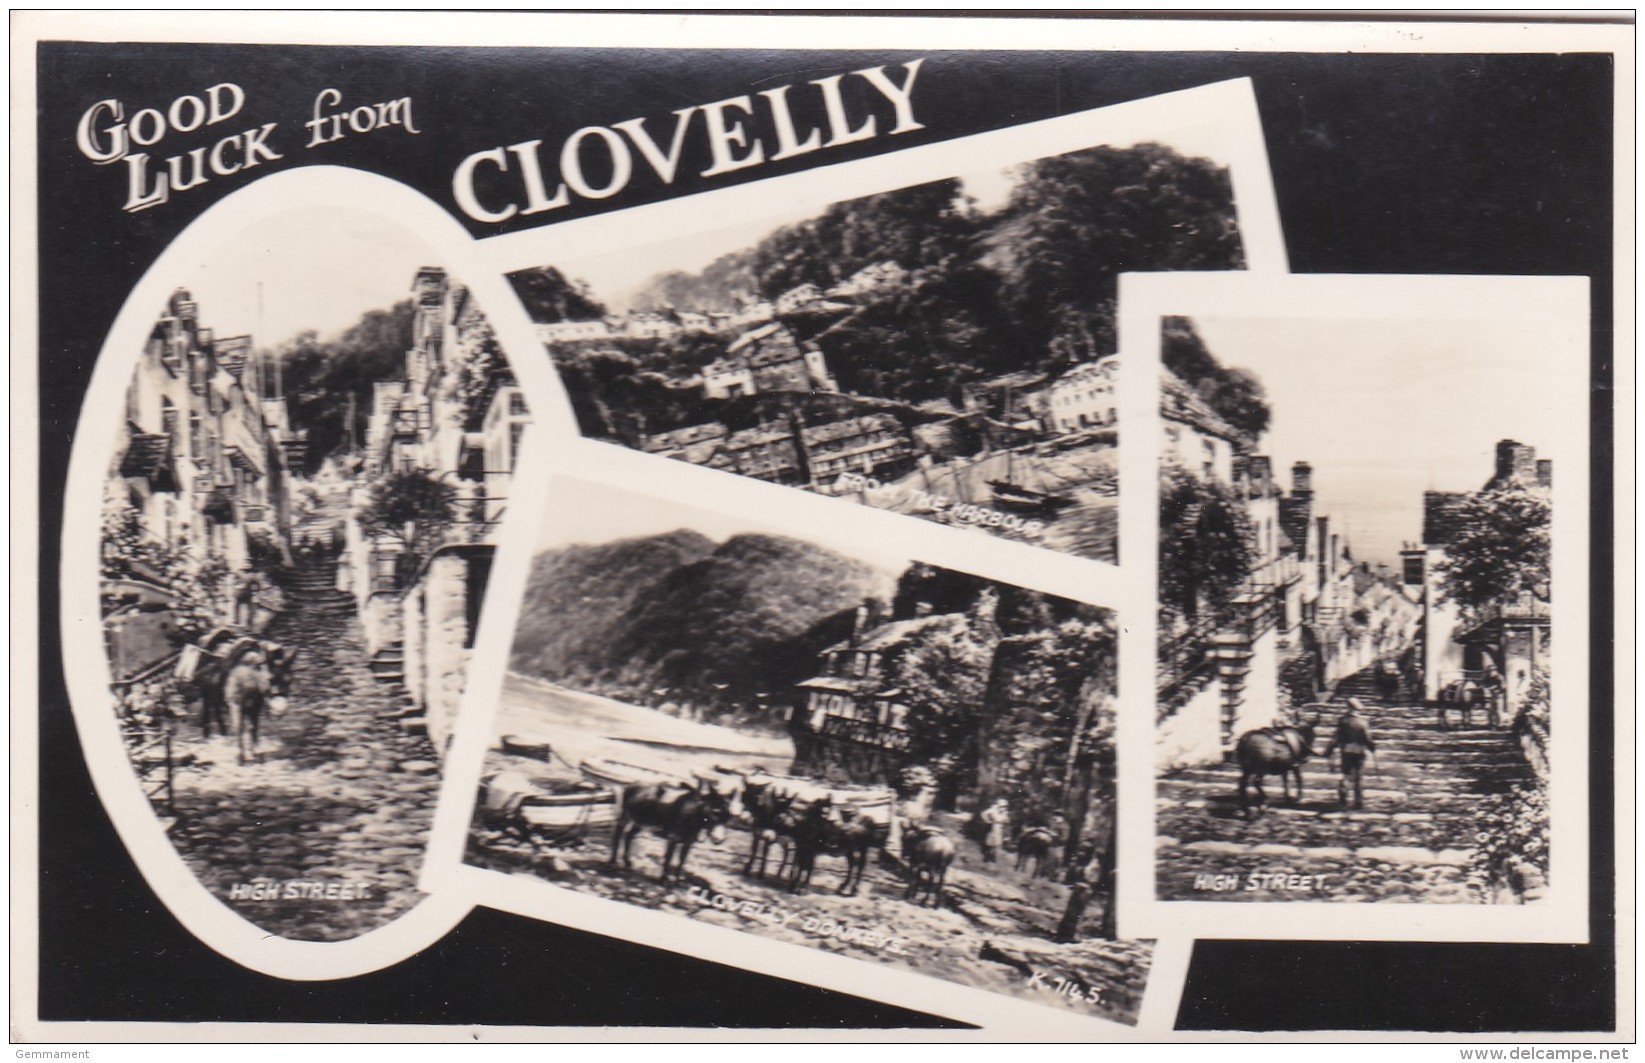 CLOVELLY MULTI VIEW - Clovelly